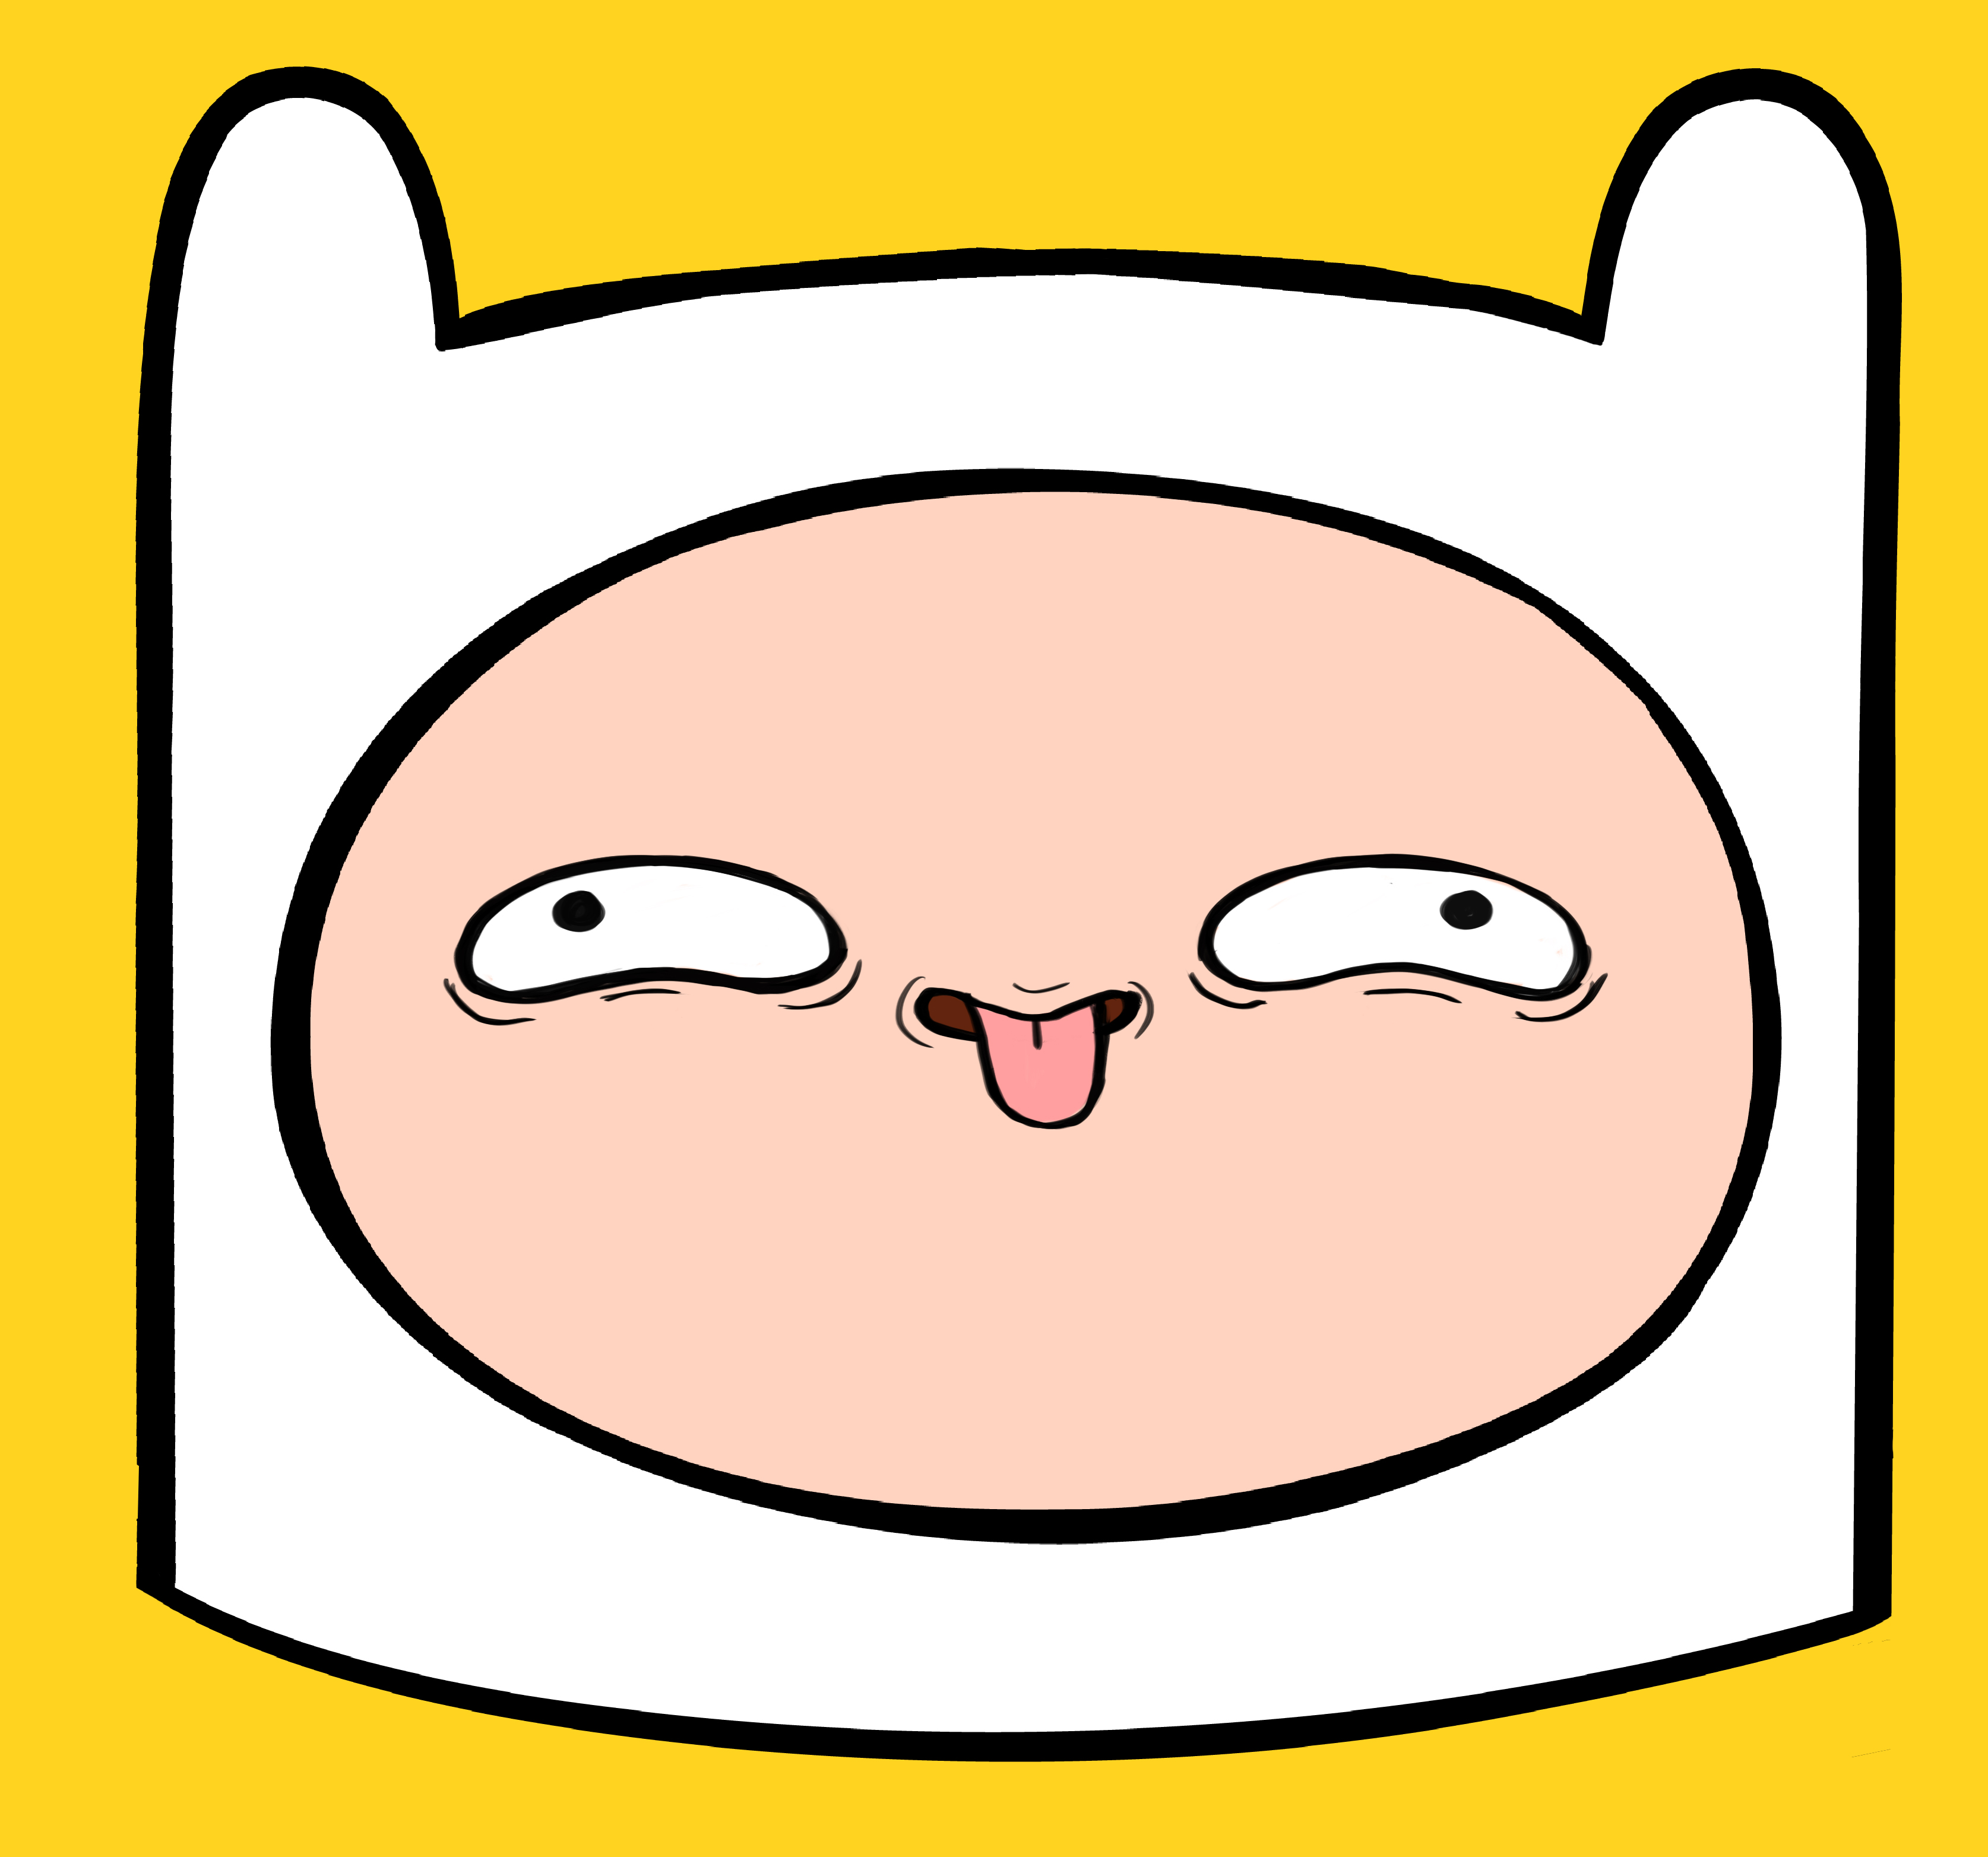 Adventure Time with Finn and Jake - desktop wallpaper